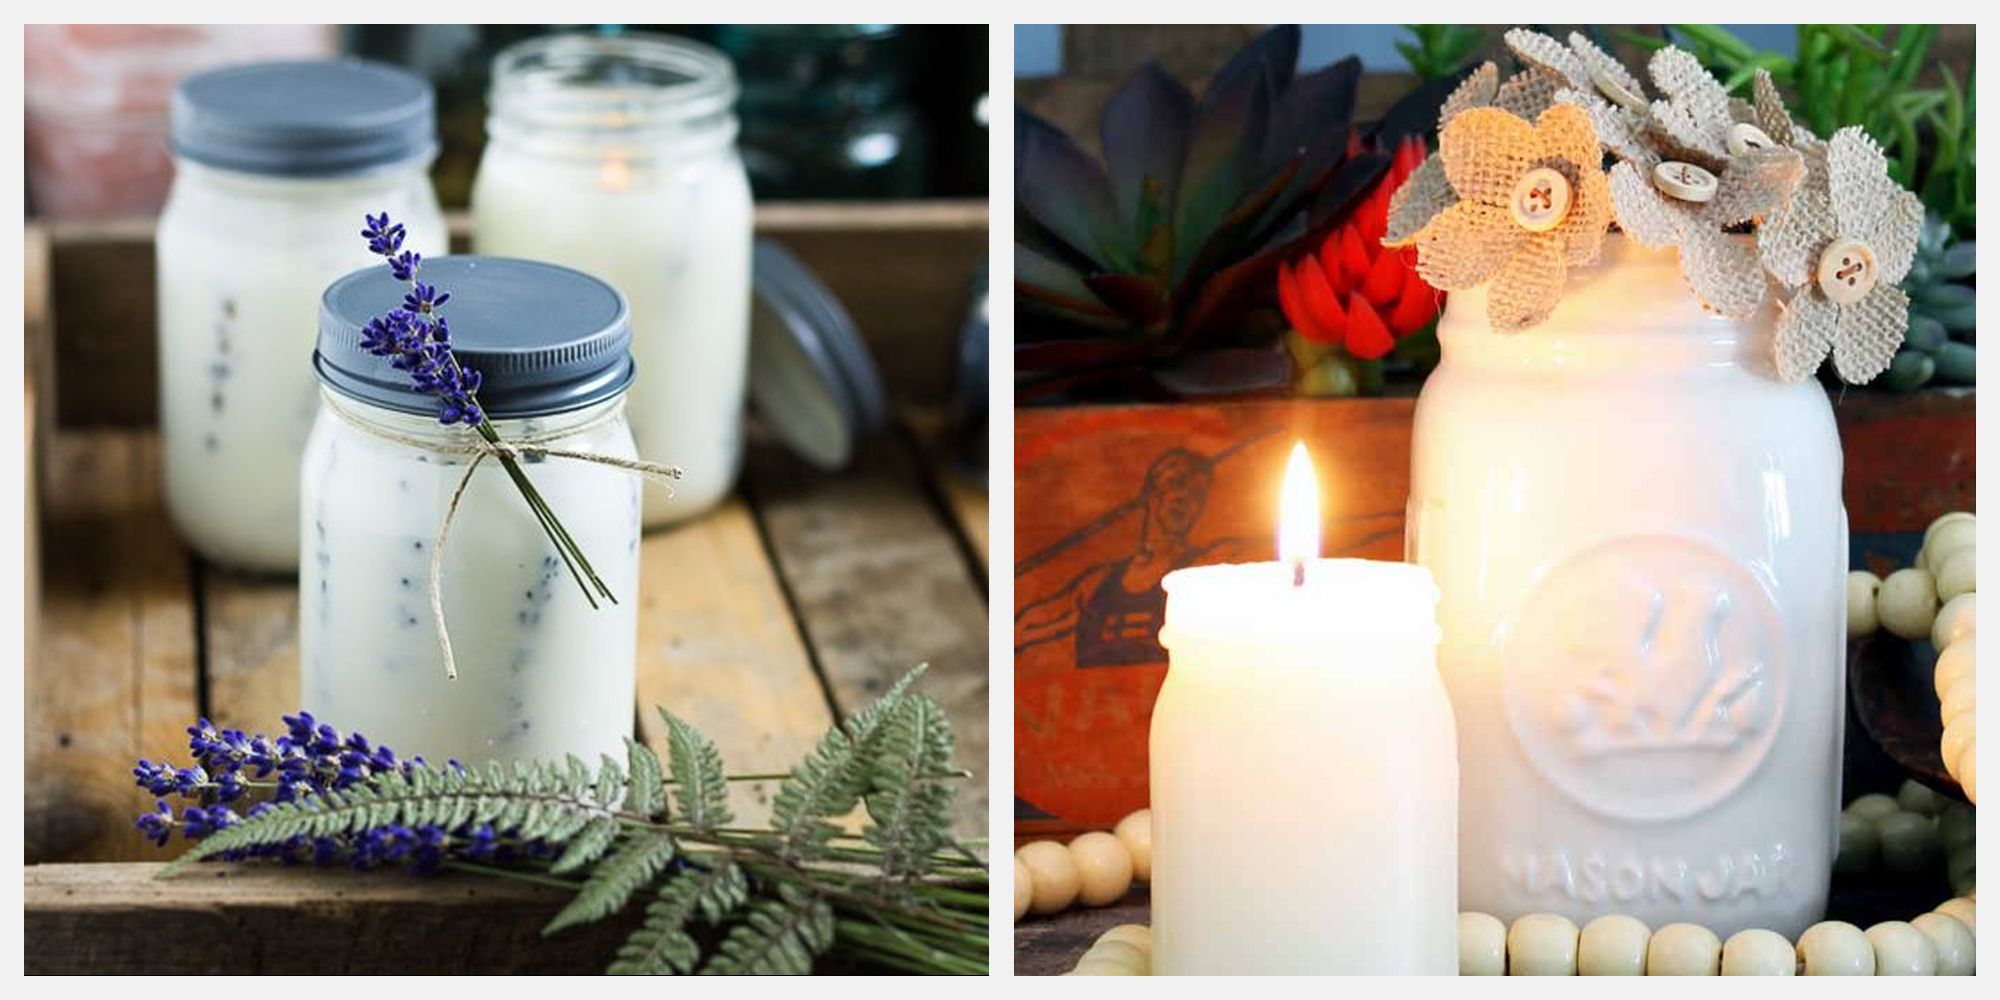 Creative Mason Jar Candles to Make Or Buy - Best DIY Mason Jar